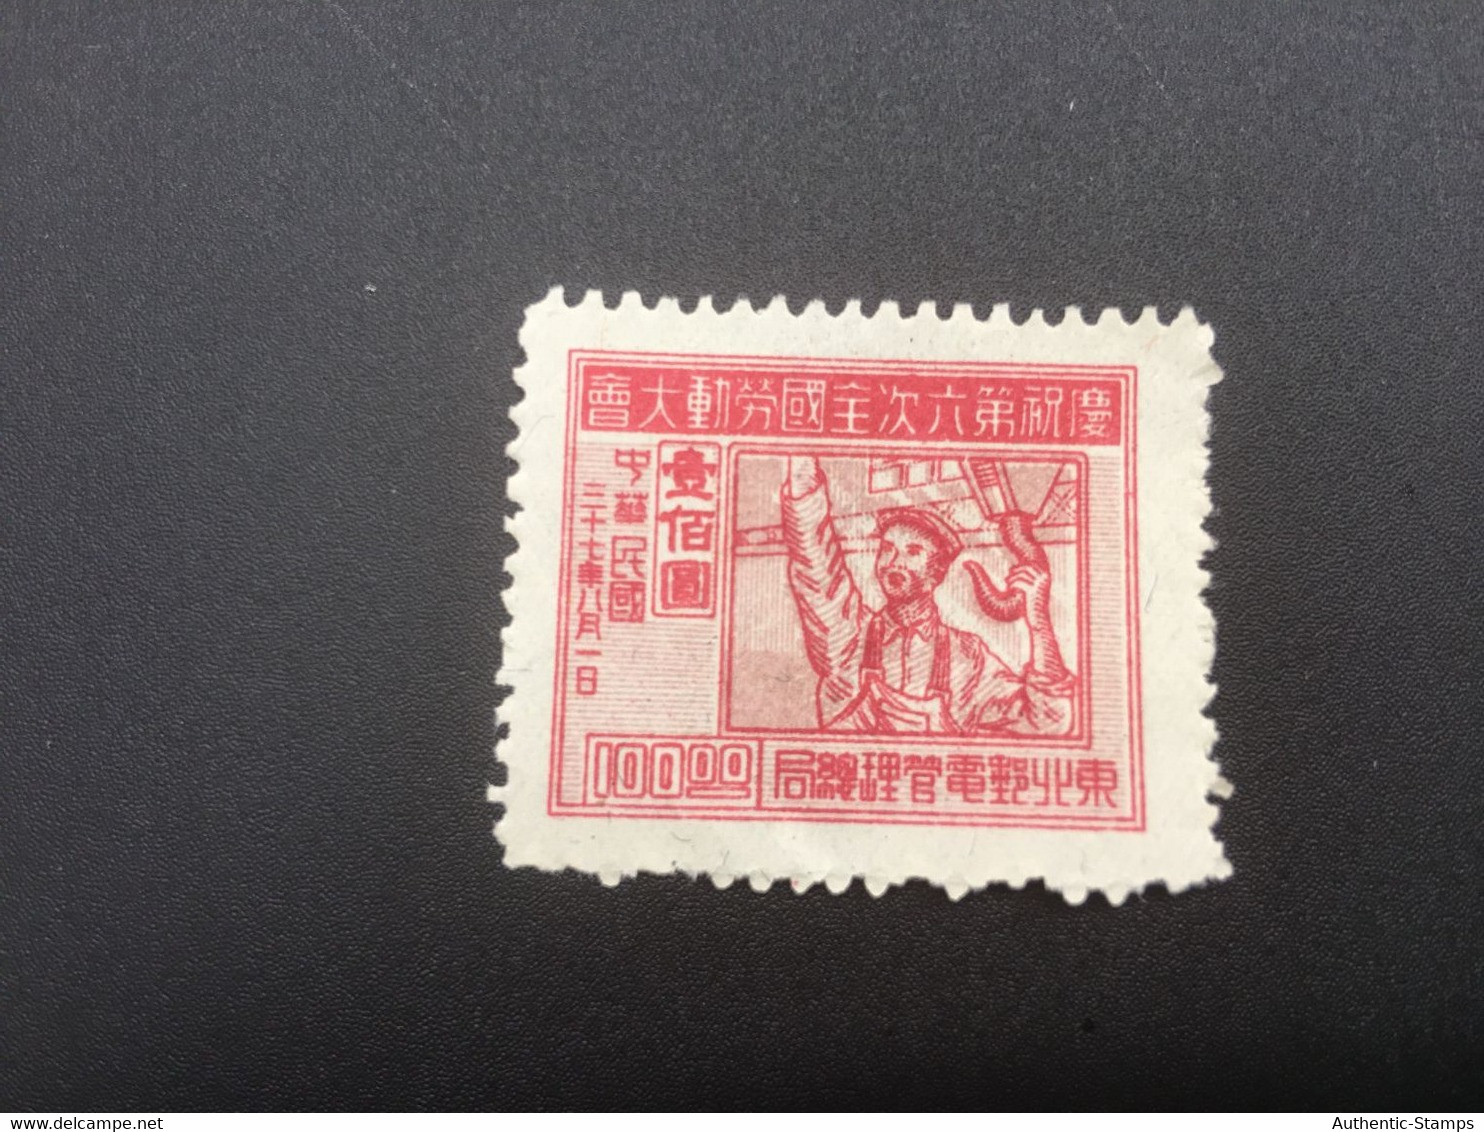 CHINA STAMP, UnUSED, TIMBRO, STEMPEL, CINA, CHINE, LIST 6178 - Noordoost-China 1946-48